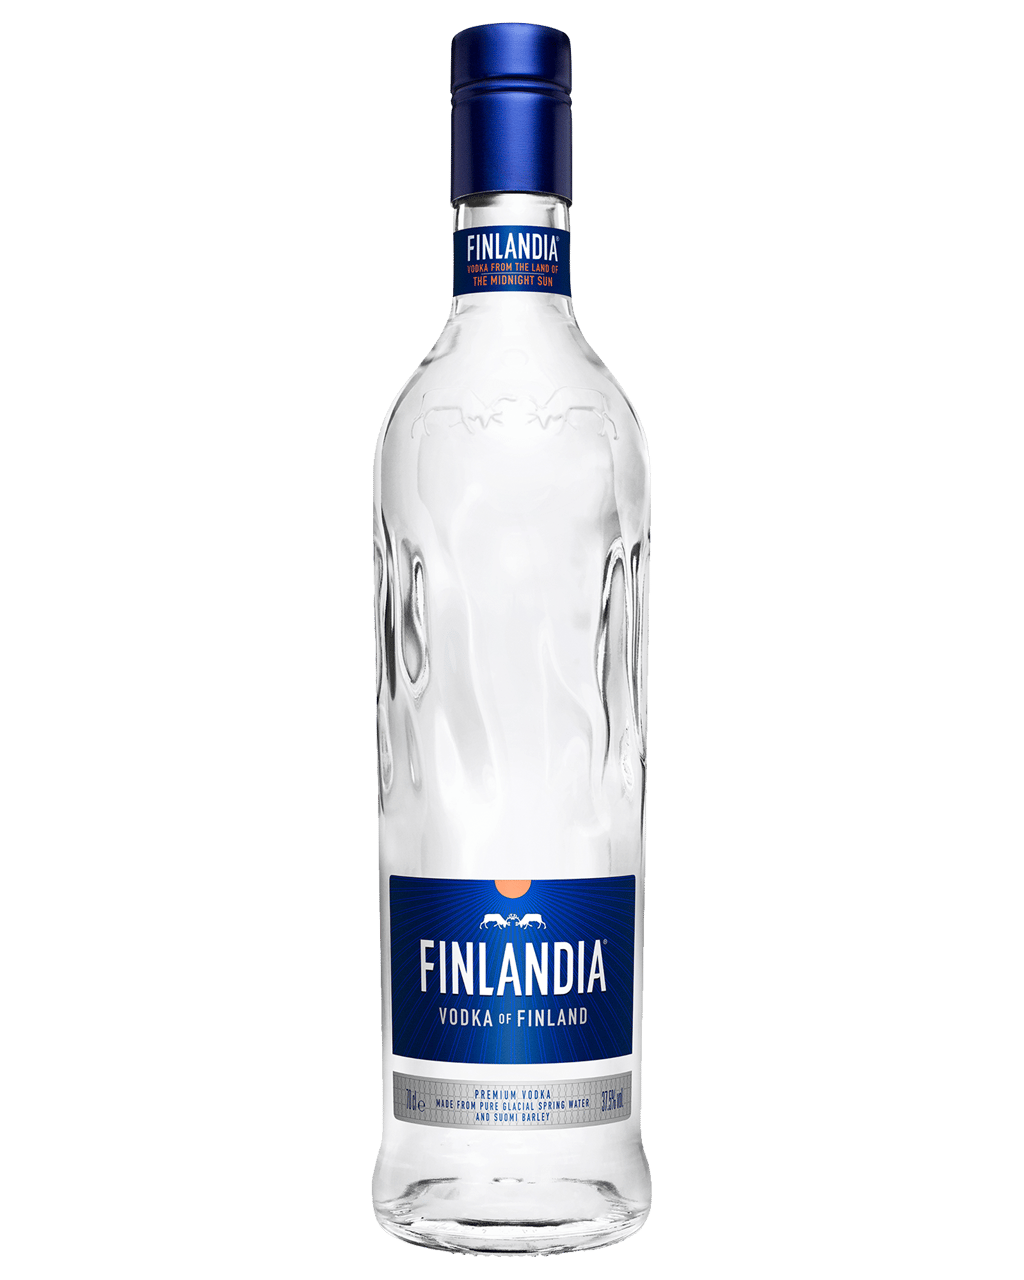 1 bottle of any vodka 700 ml